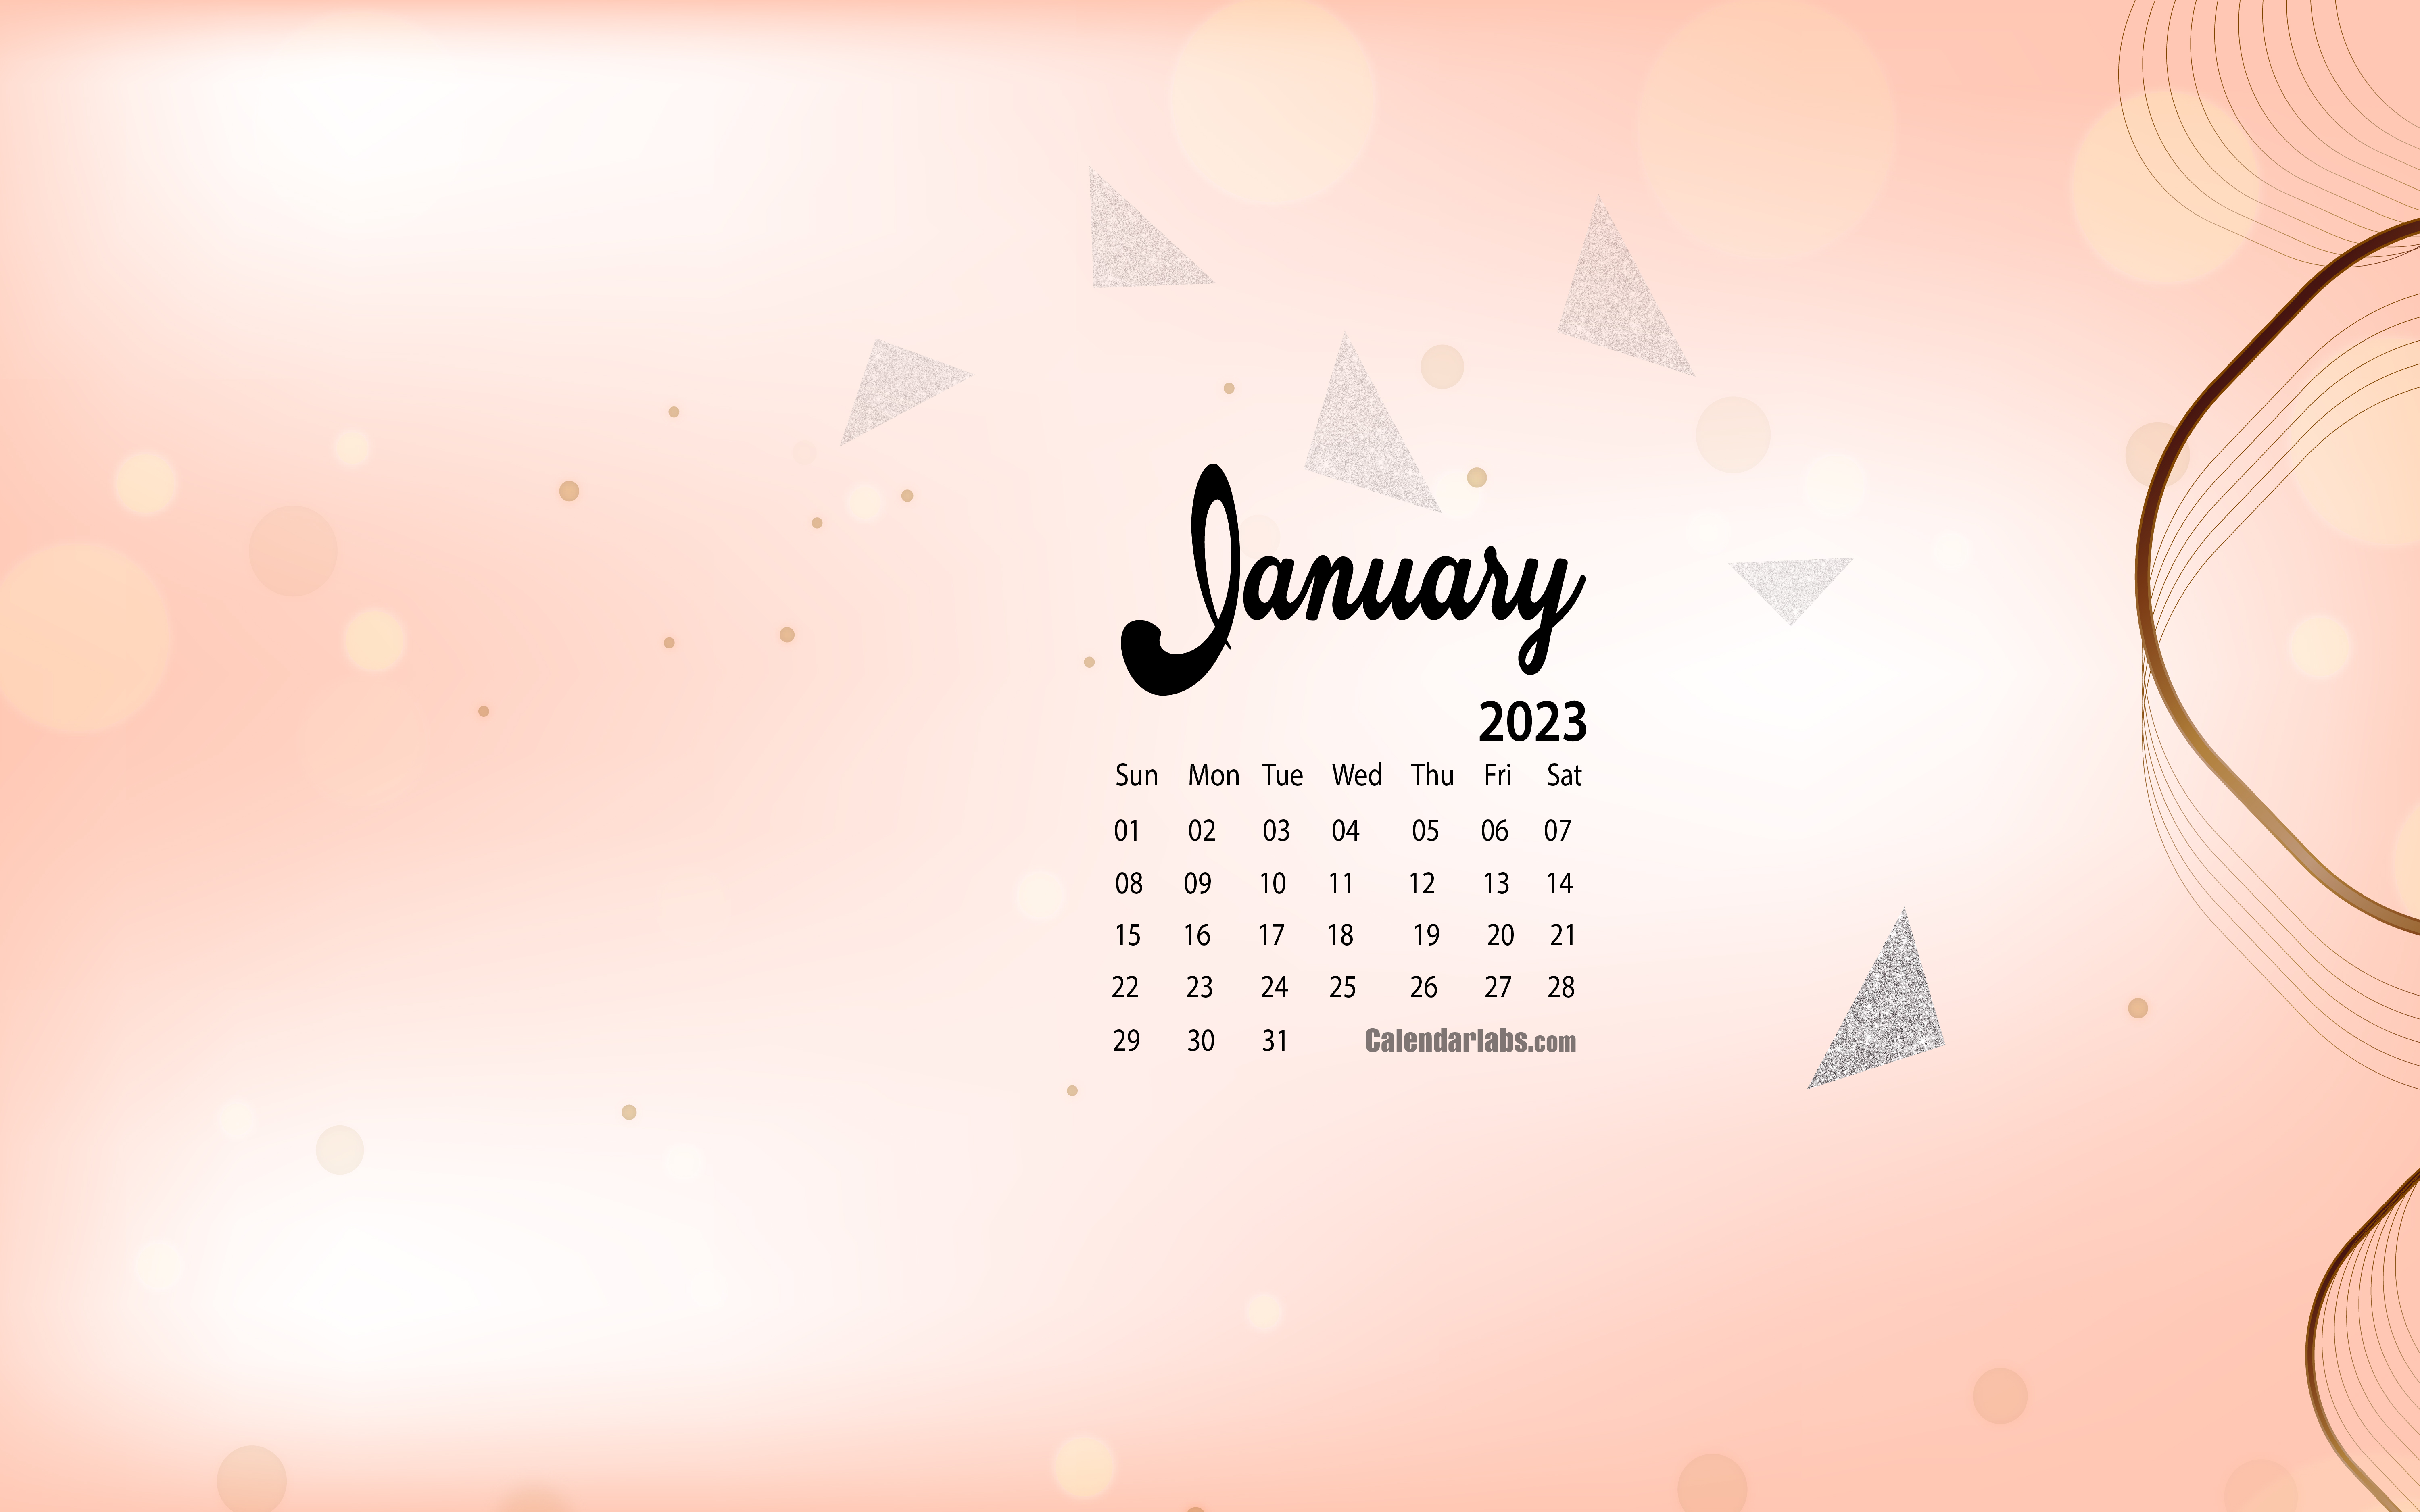 blogkriegsnet  January variant of my calendar wallpaper series